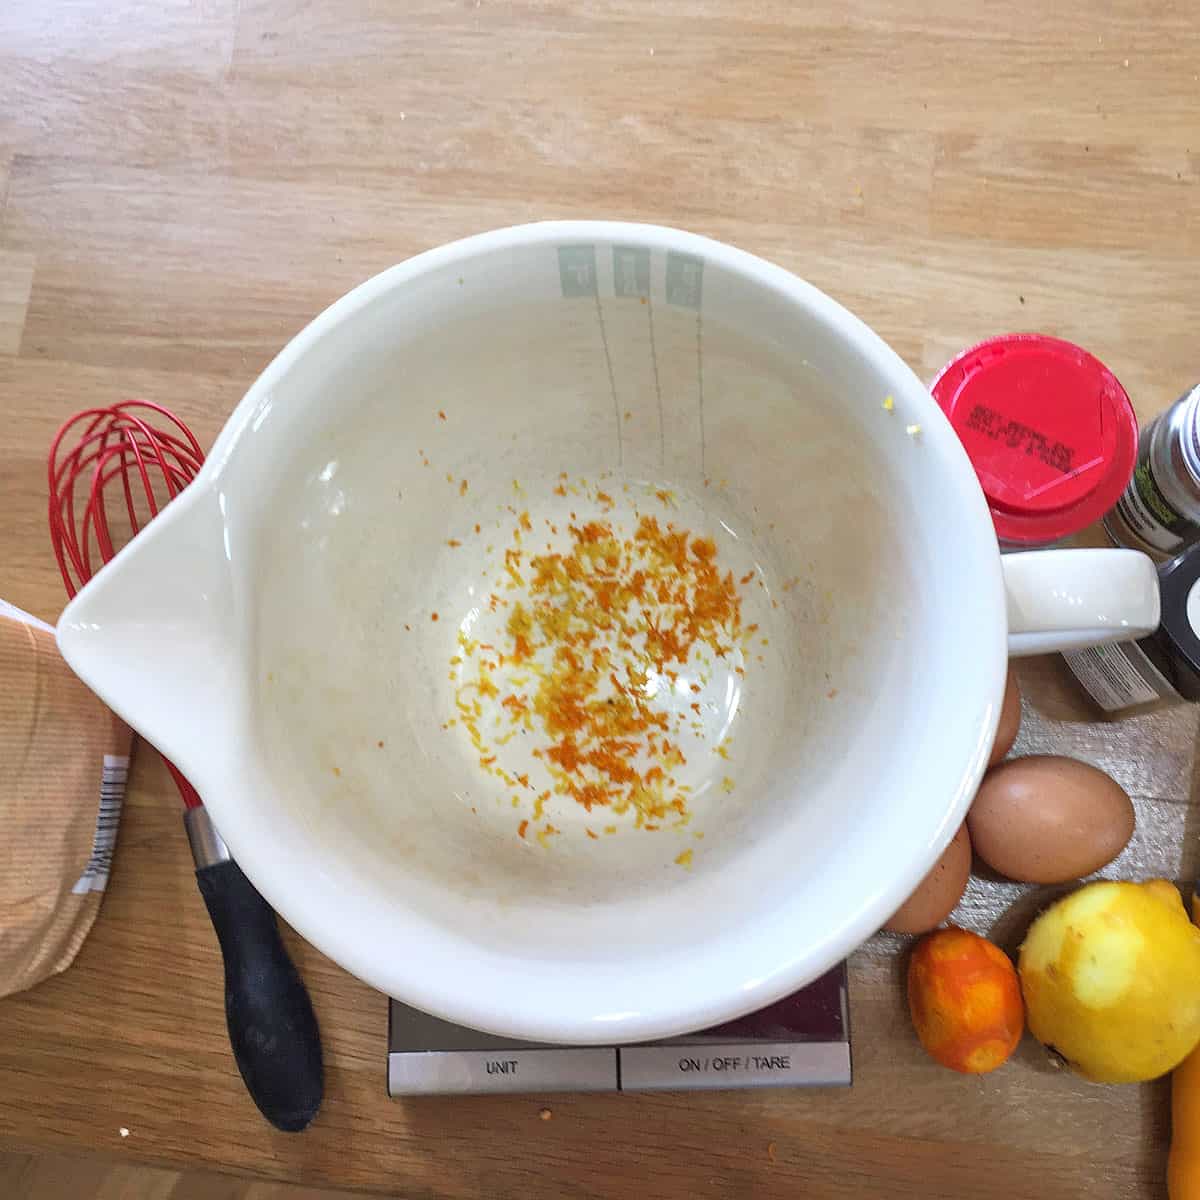 Hot cross bun waffles with orange zest in bowl